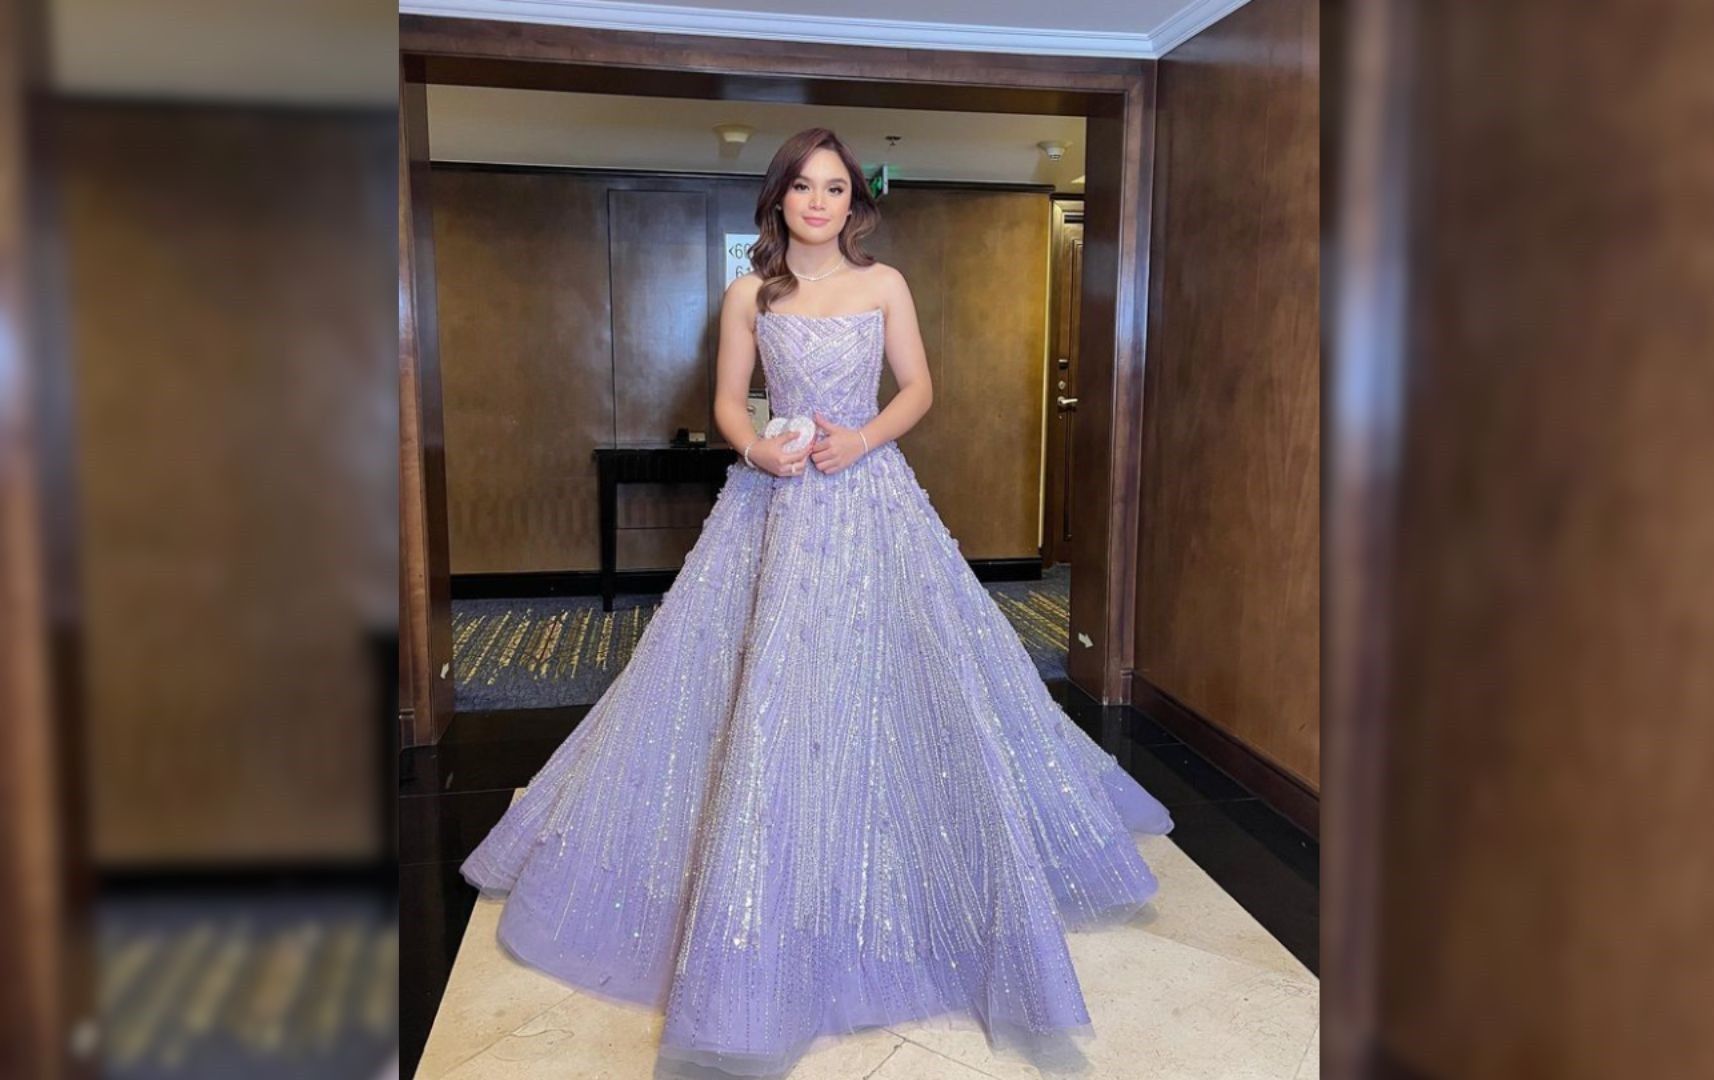 Putri sulung Manny Pacquiao, Putri, menghadiri pesta prom dengan gaun tertutup Swarovski